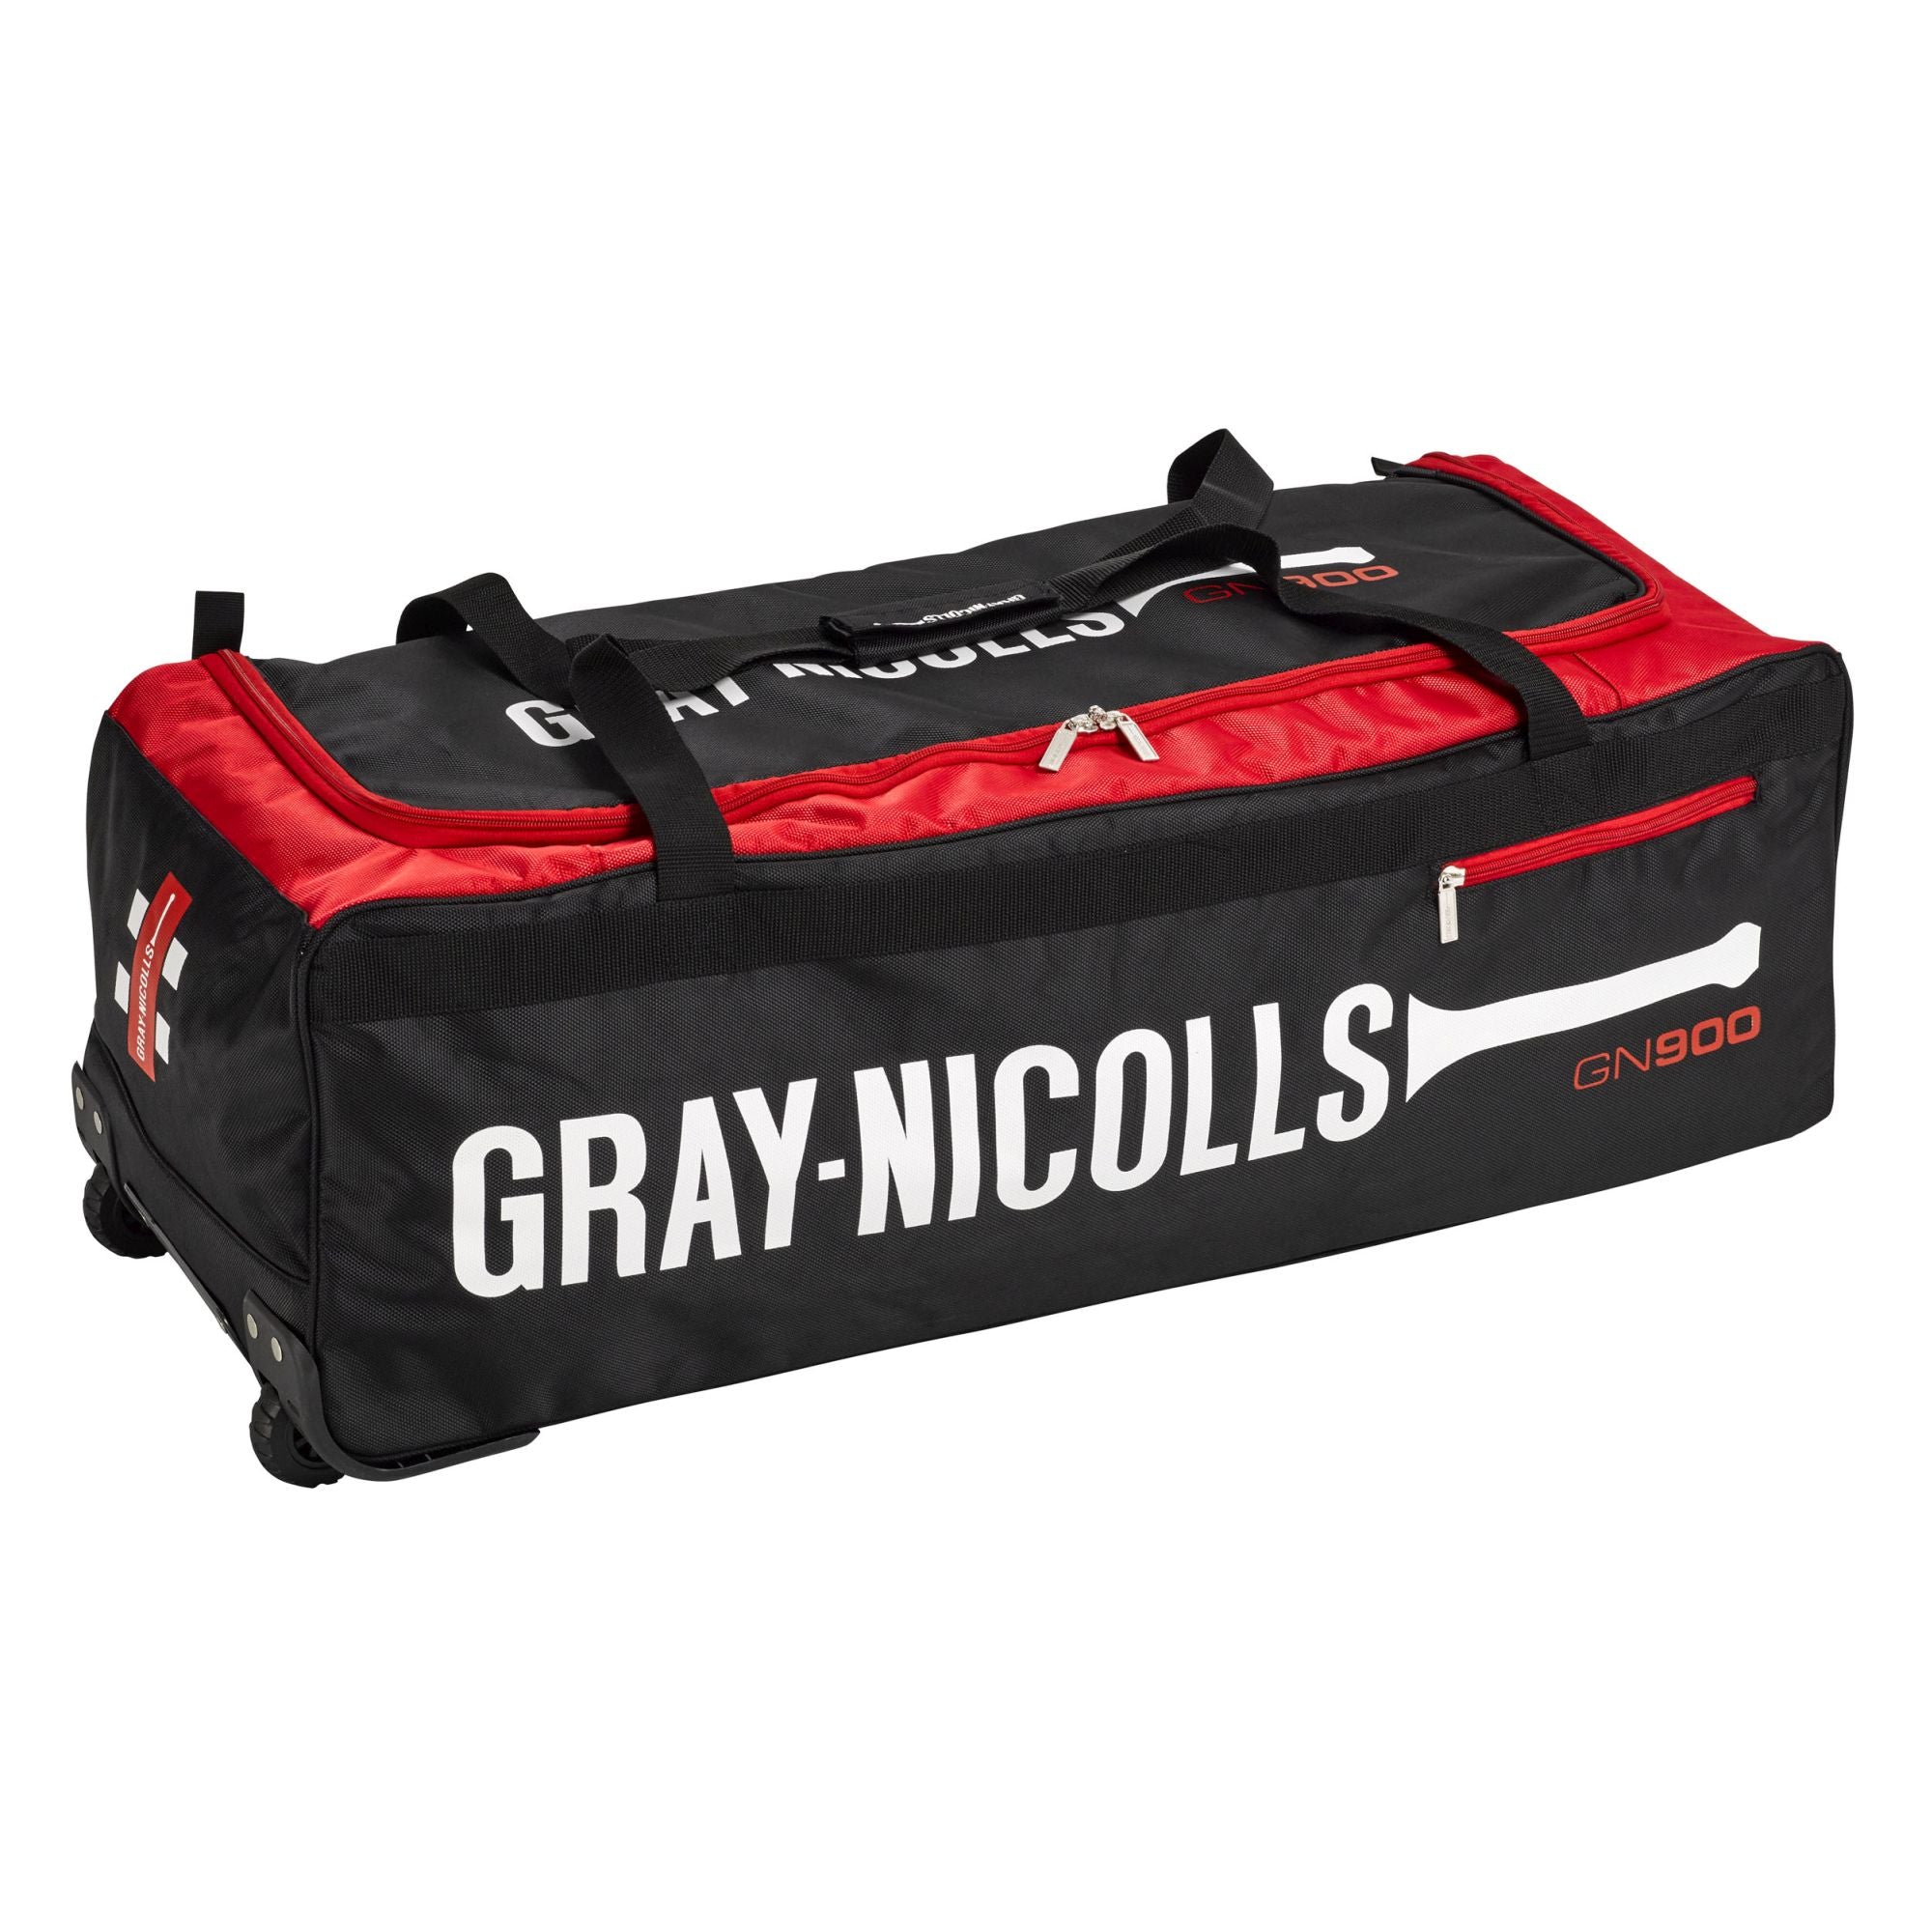 Gray-Nicolls GN 900 Cricket Wheel Bag Black/Red